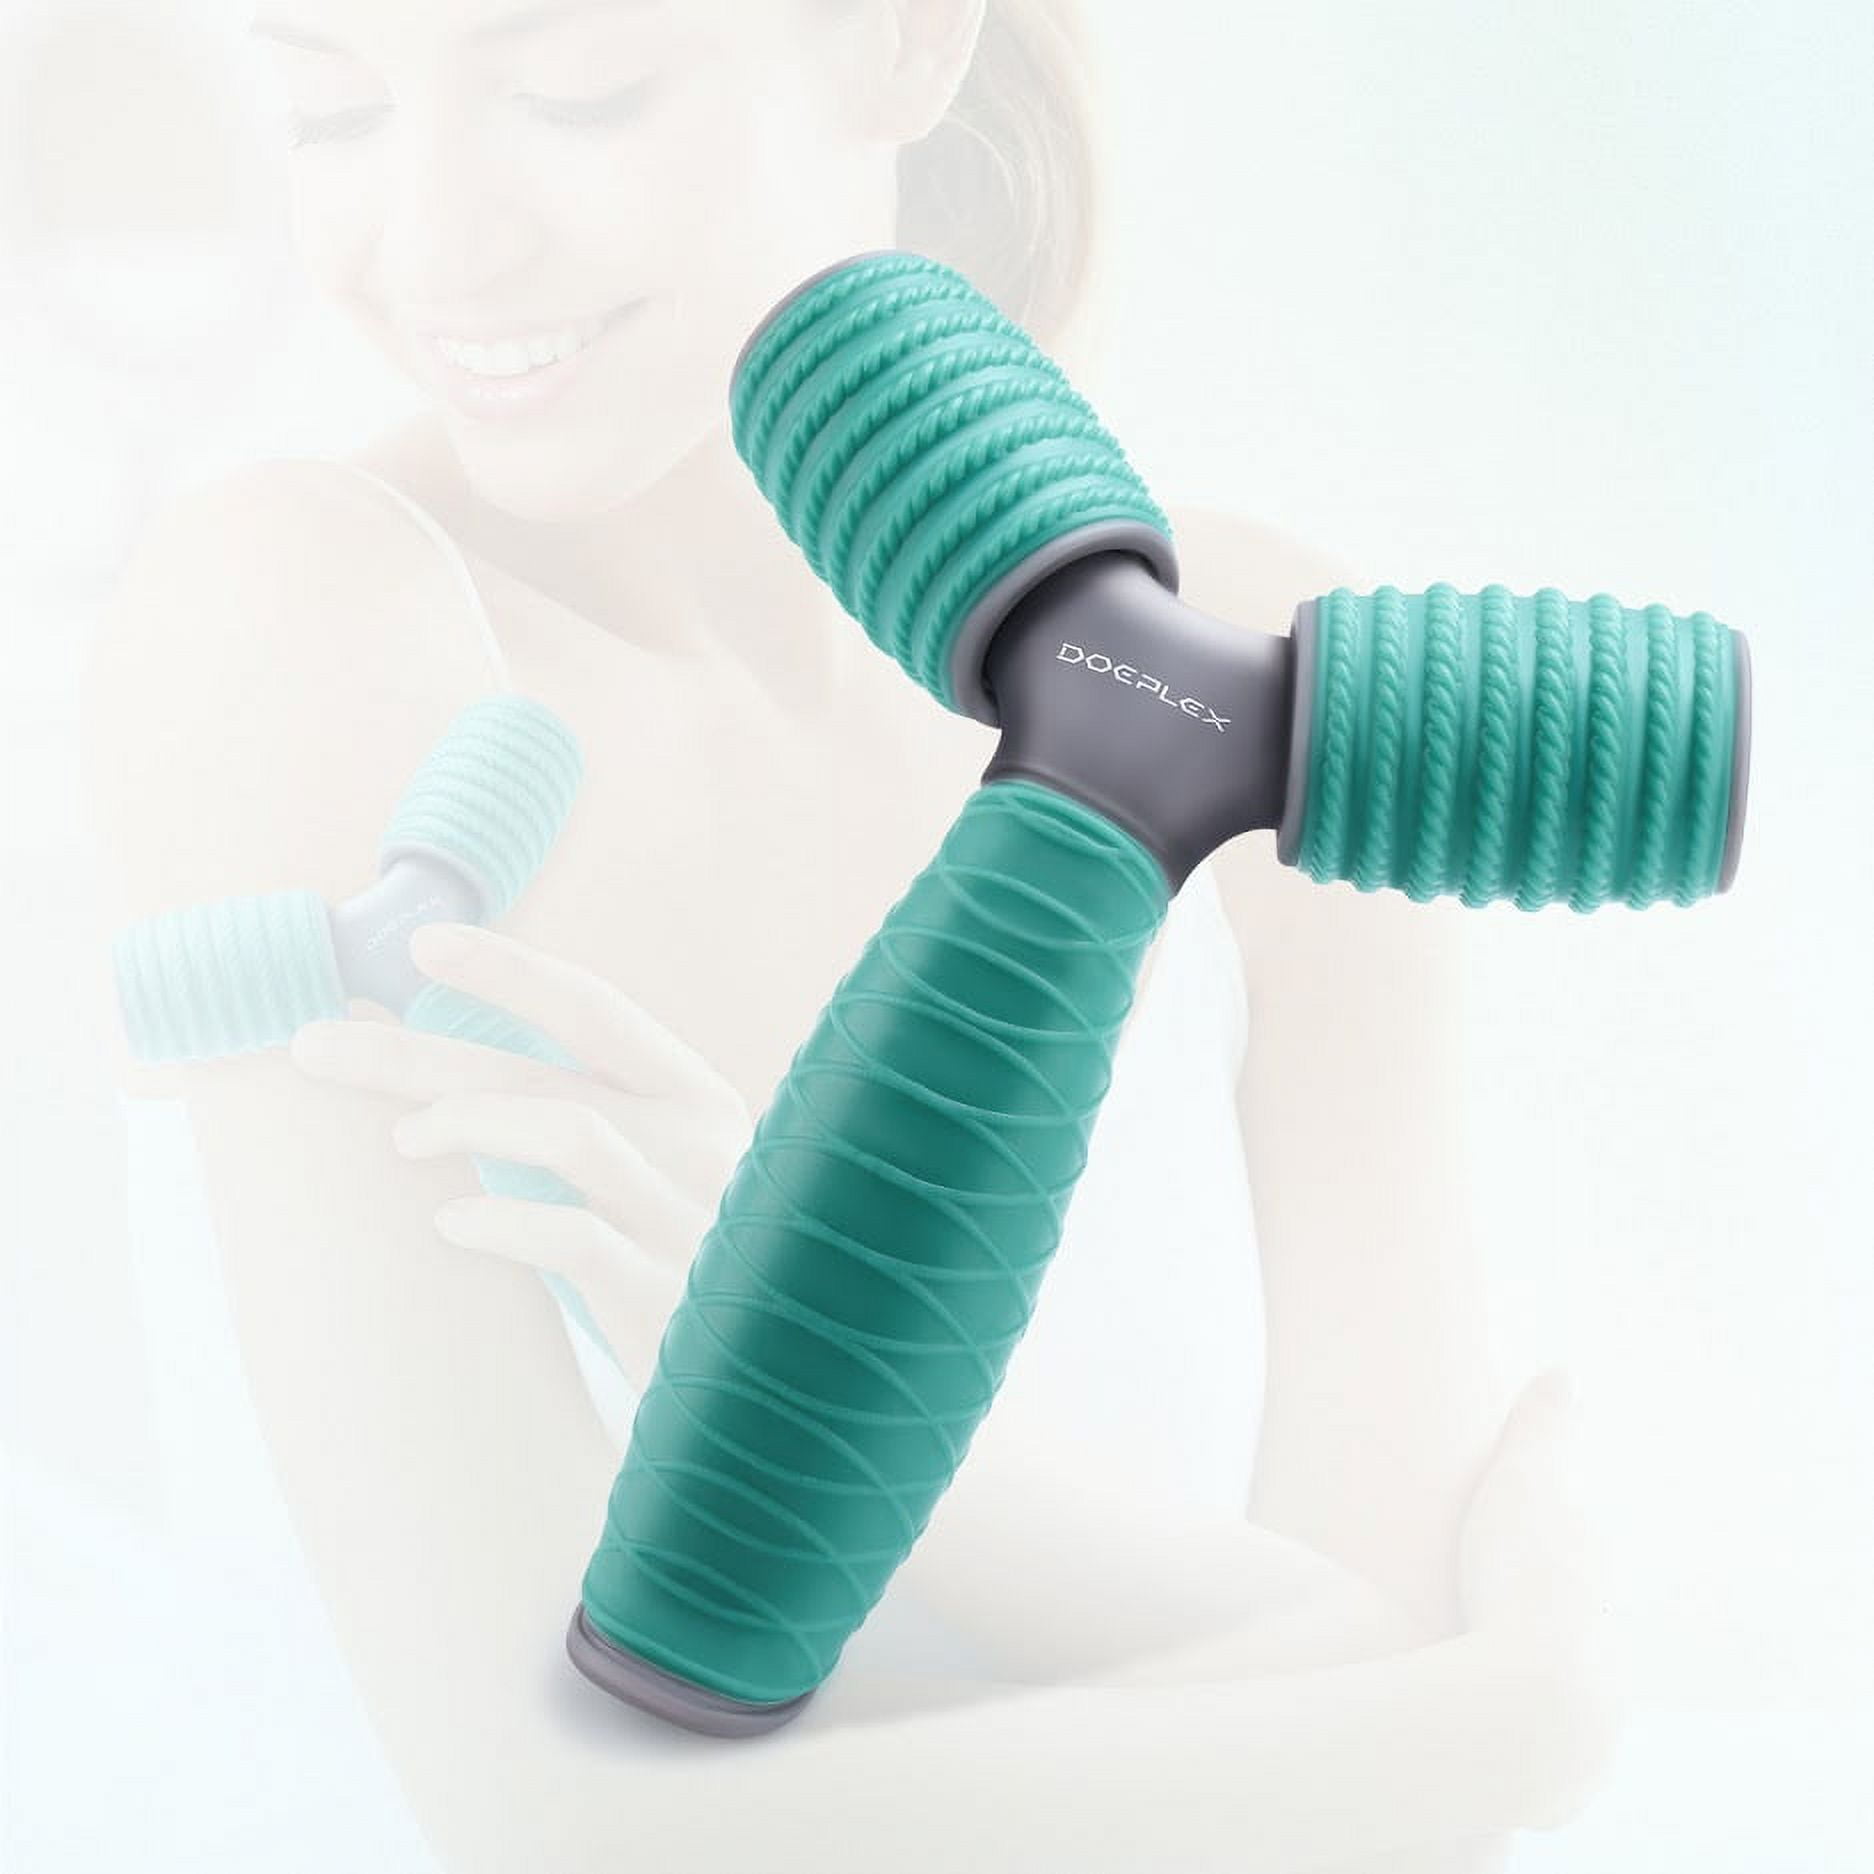 Doeplex Muscle Roller Handheld Massager For Neck Shoulder Arm Leg Body Relaxation Roller For